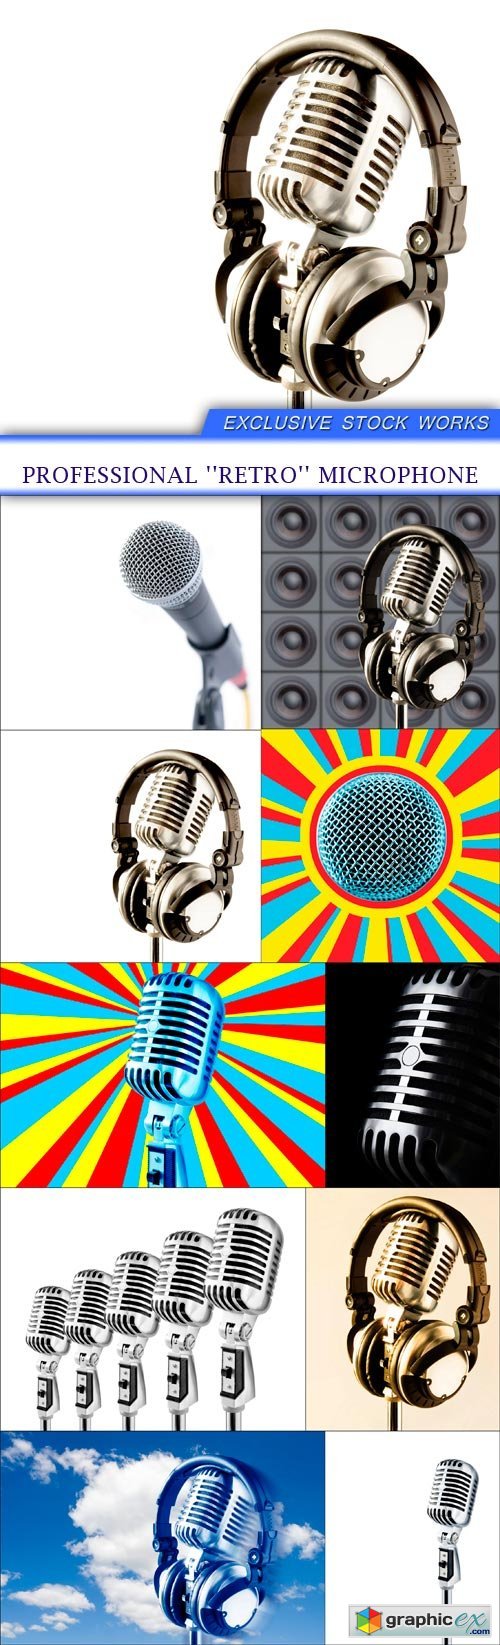 professional ''retro'' microphone 10x JPEG